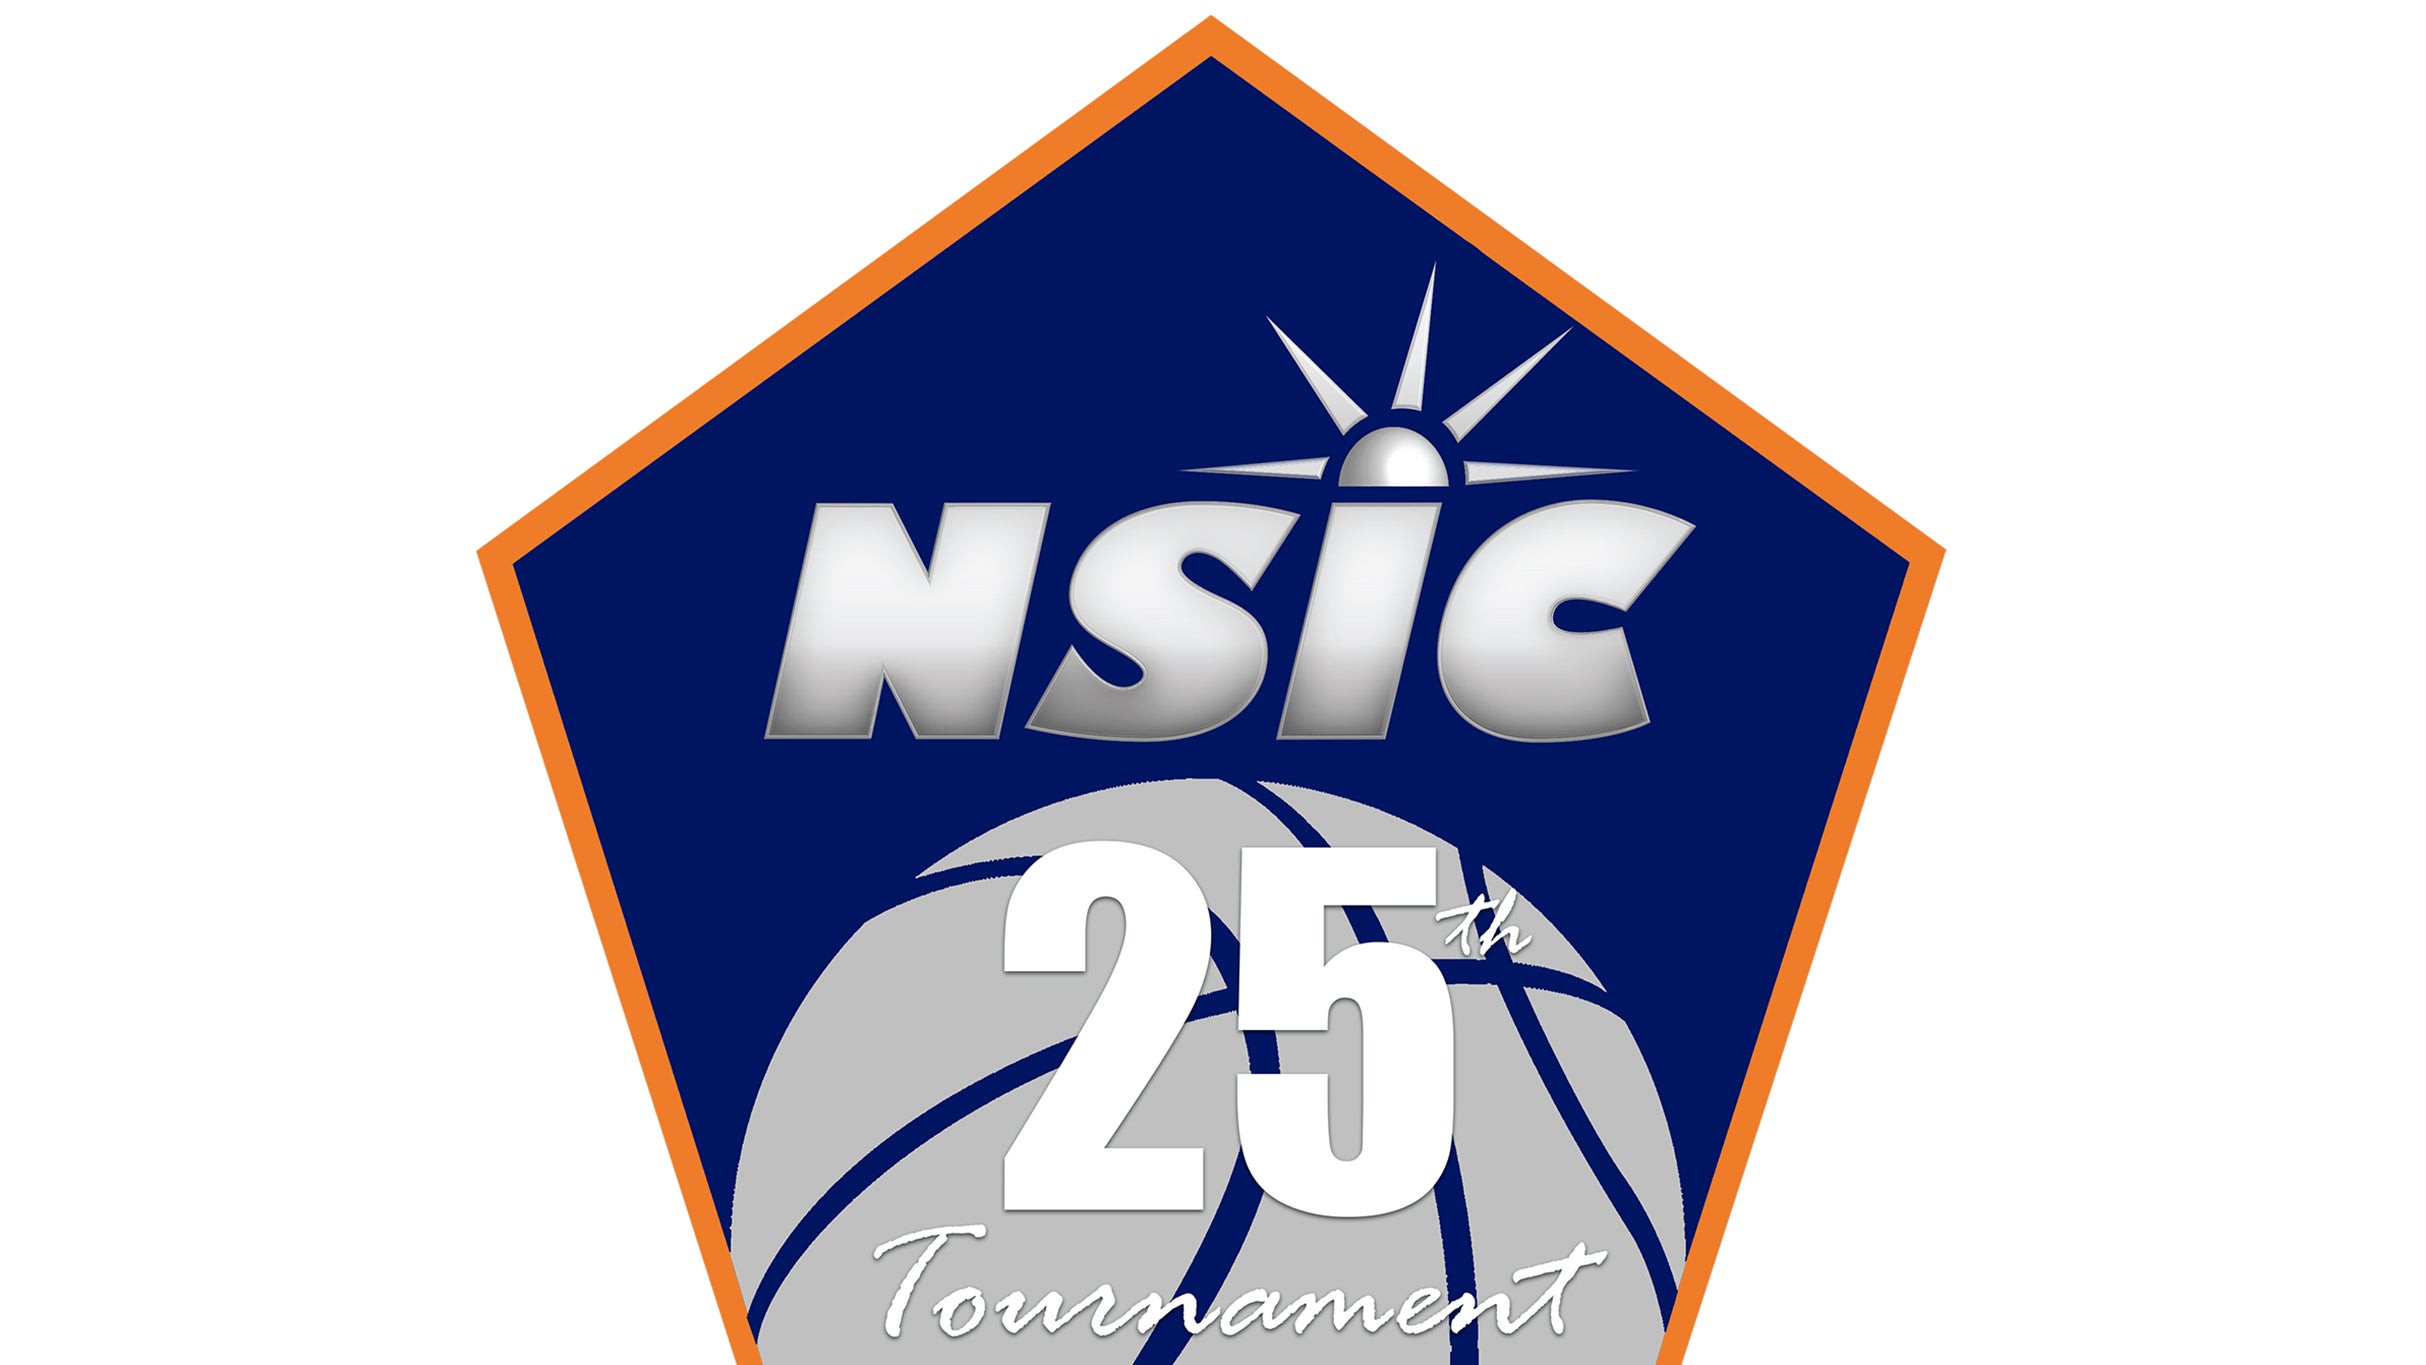 NSIC Tournament - Session 5-Men's at Sanford Pentagon - Sioux Falls, SD 57107